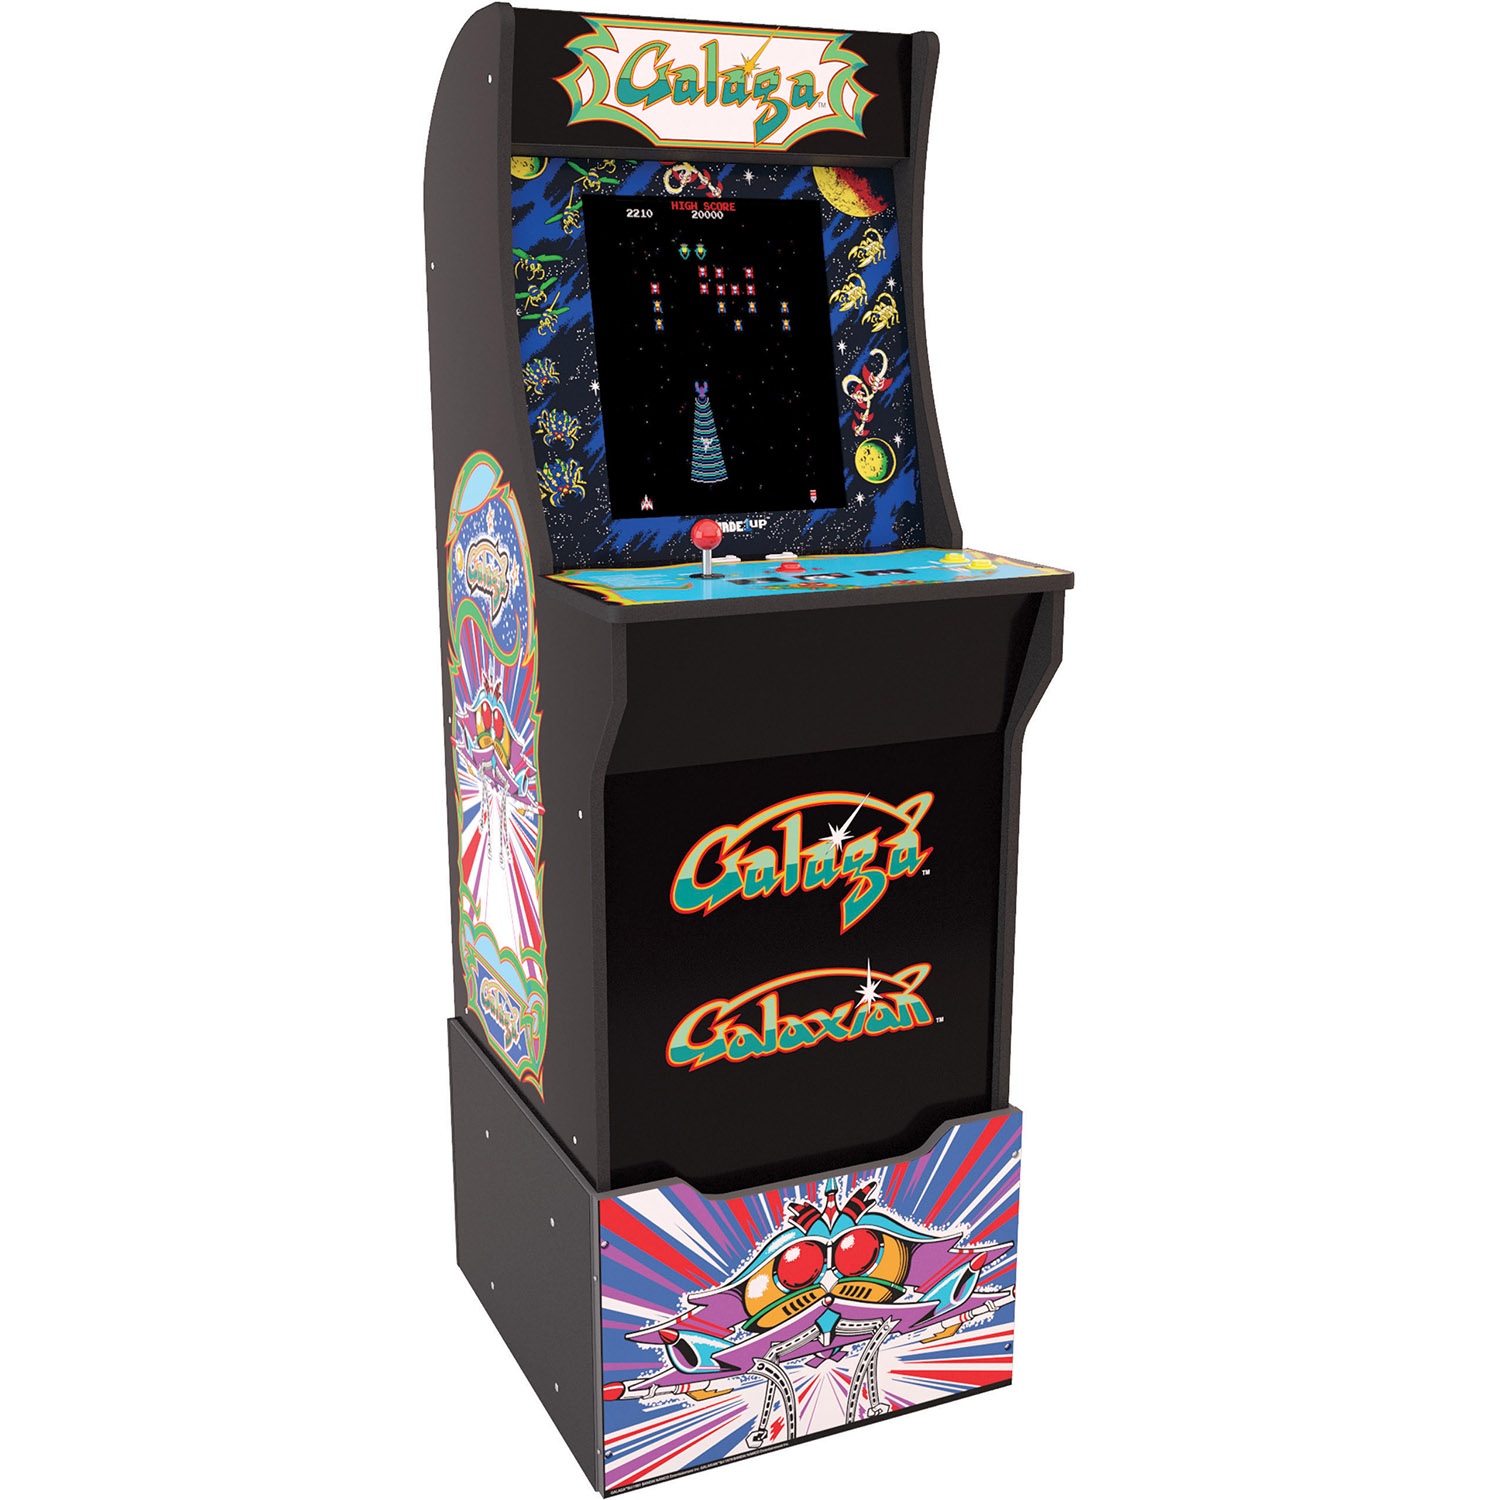 Galaga Arcade Machine with Riser, Arcade1UP - image 1 of 4